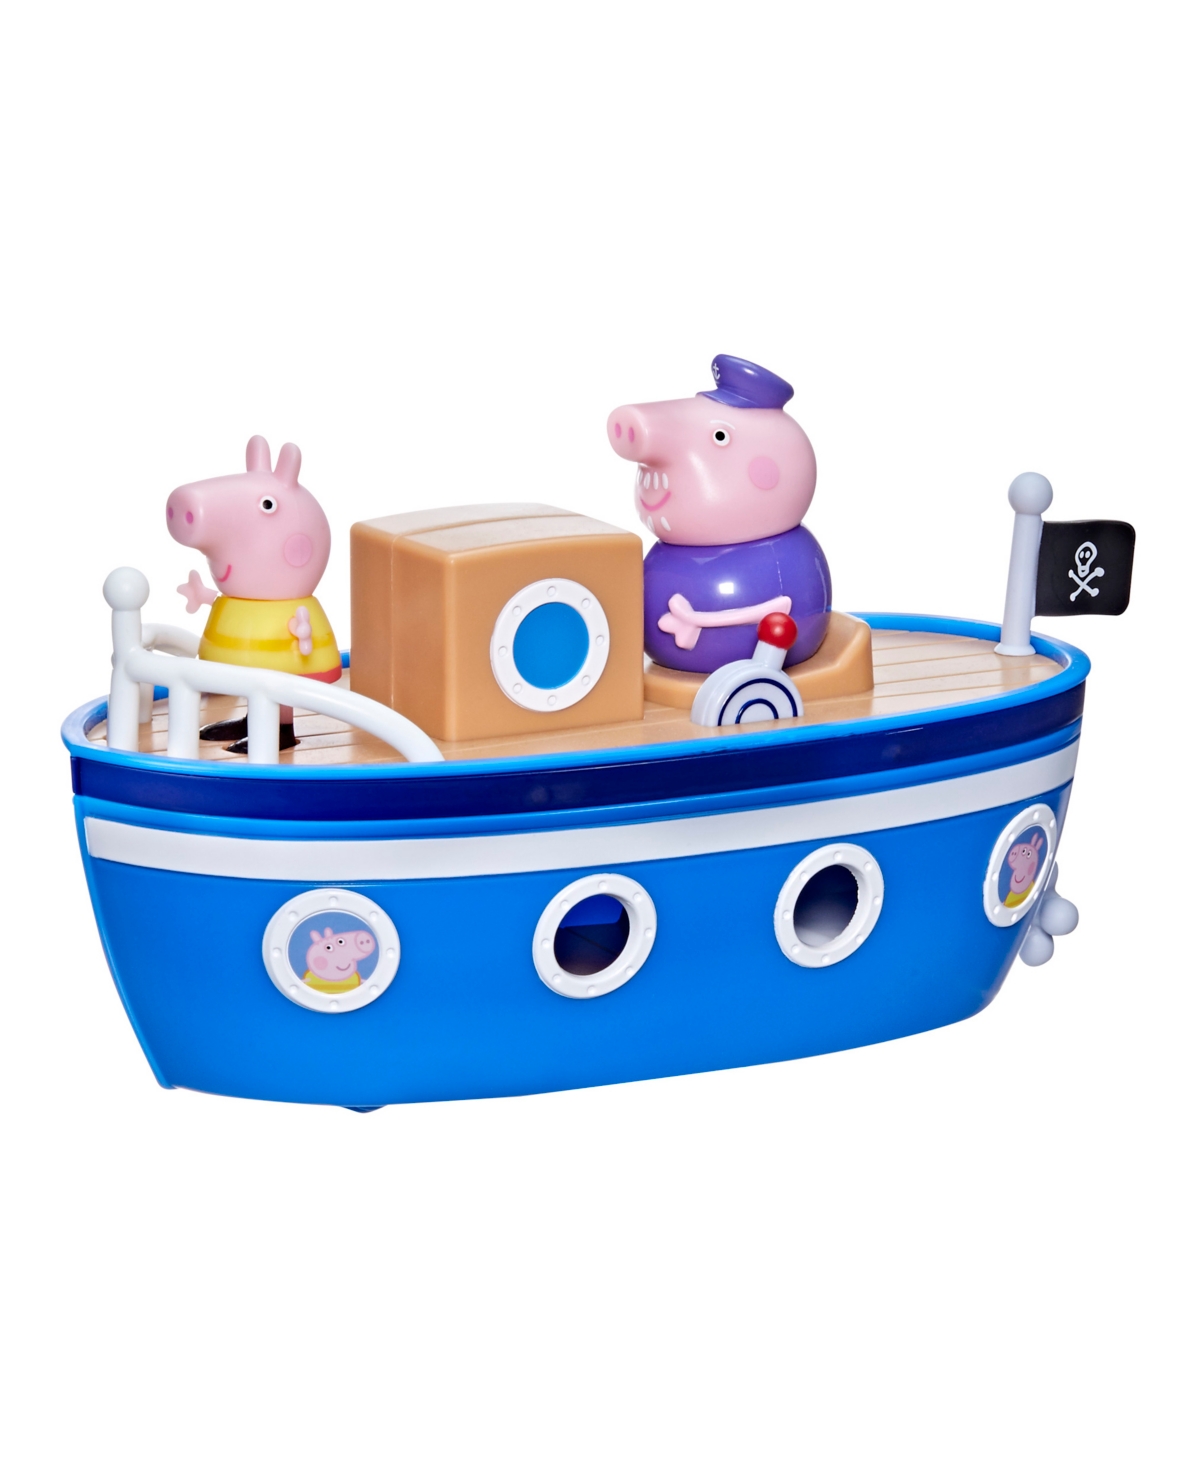 Peppa Pig Kids' Grandpa Pig's Cabin Boat In No Color